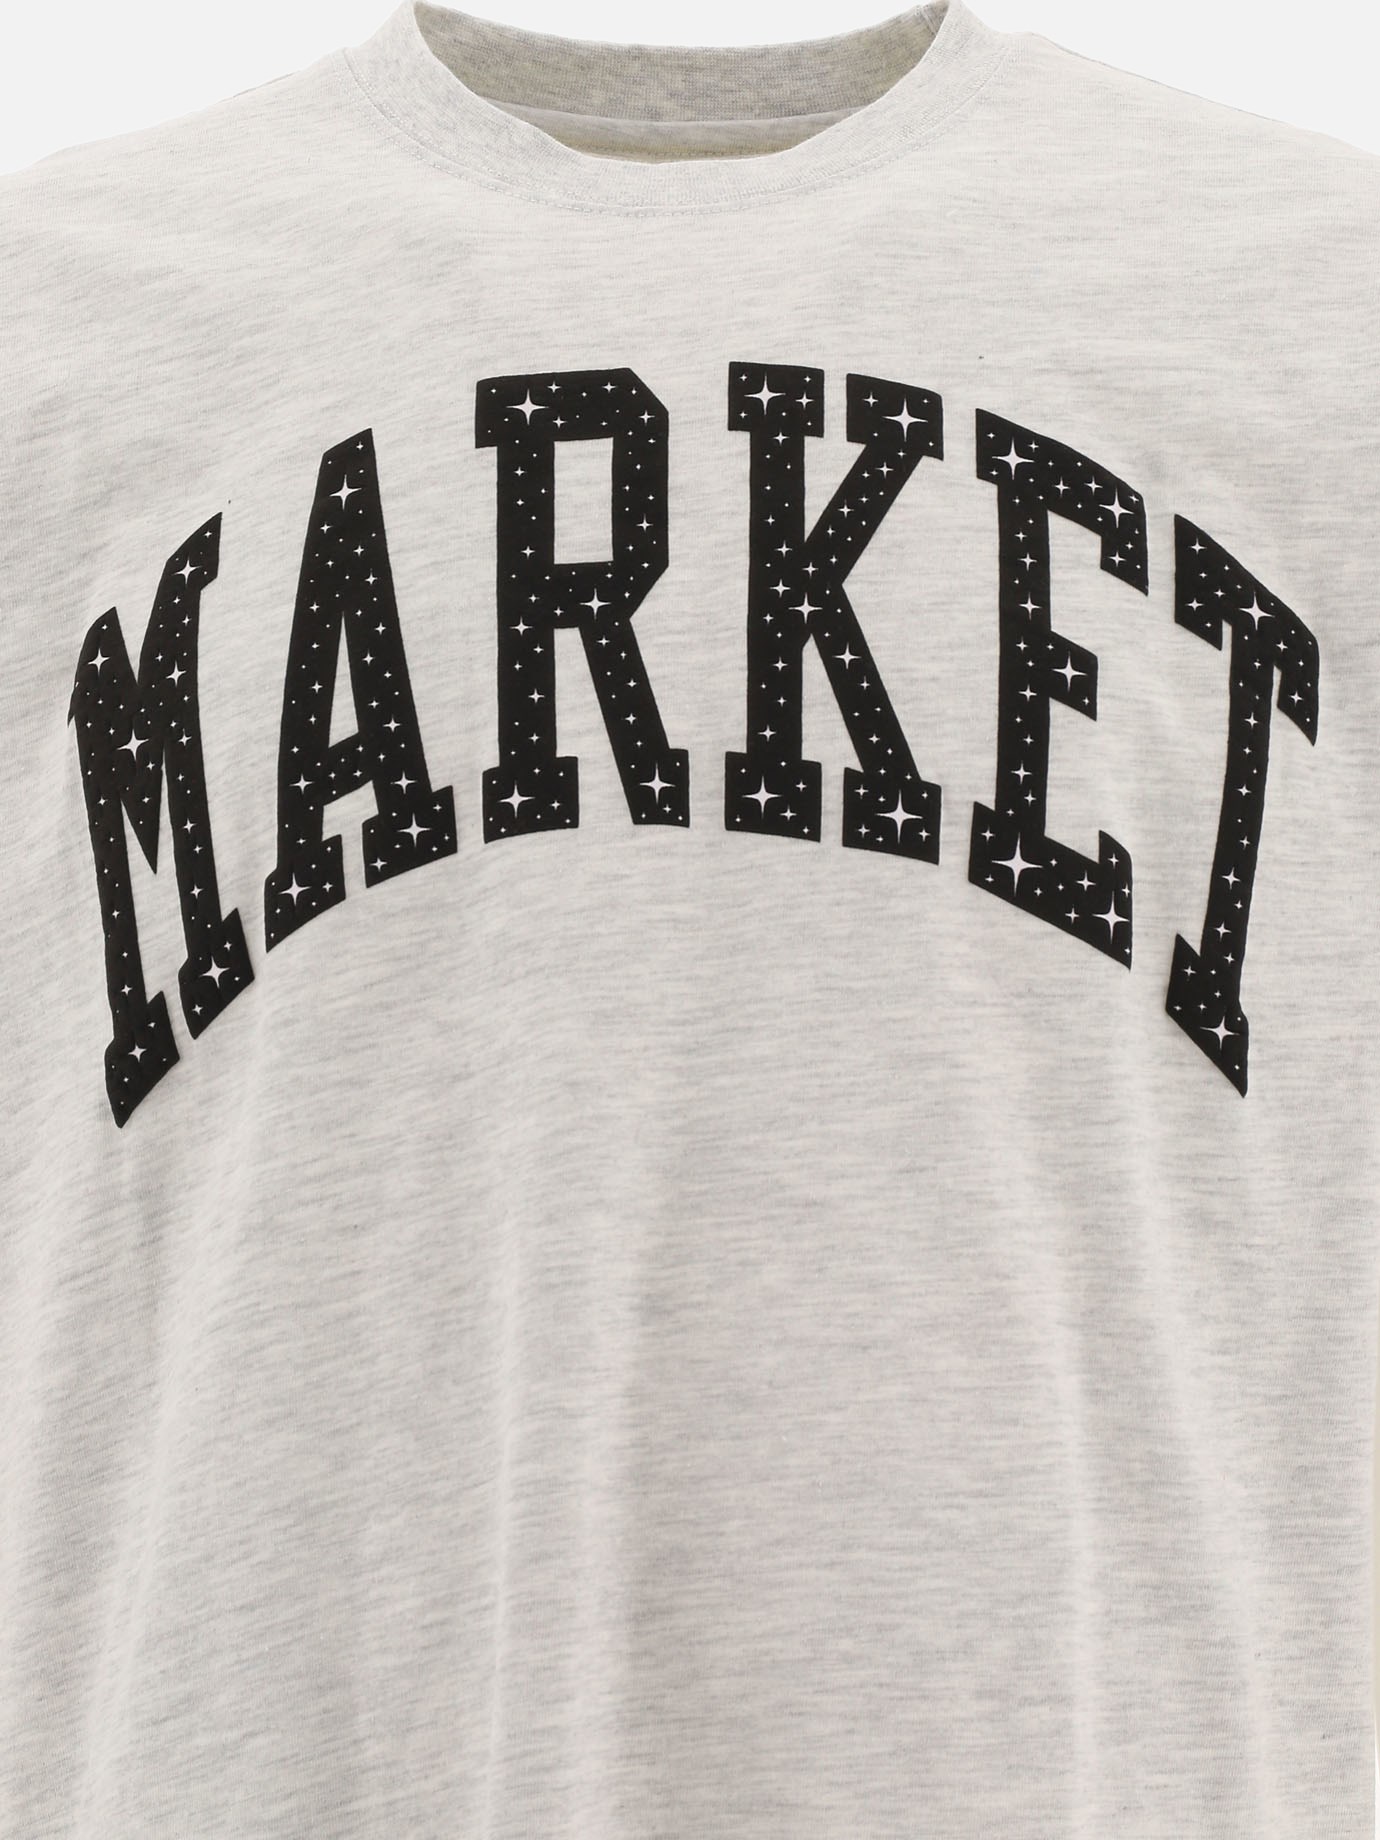 T-shirt  Market Arc  by Market